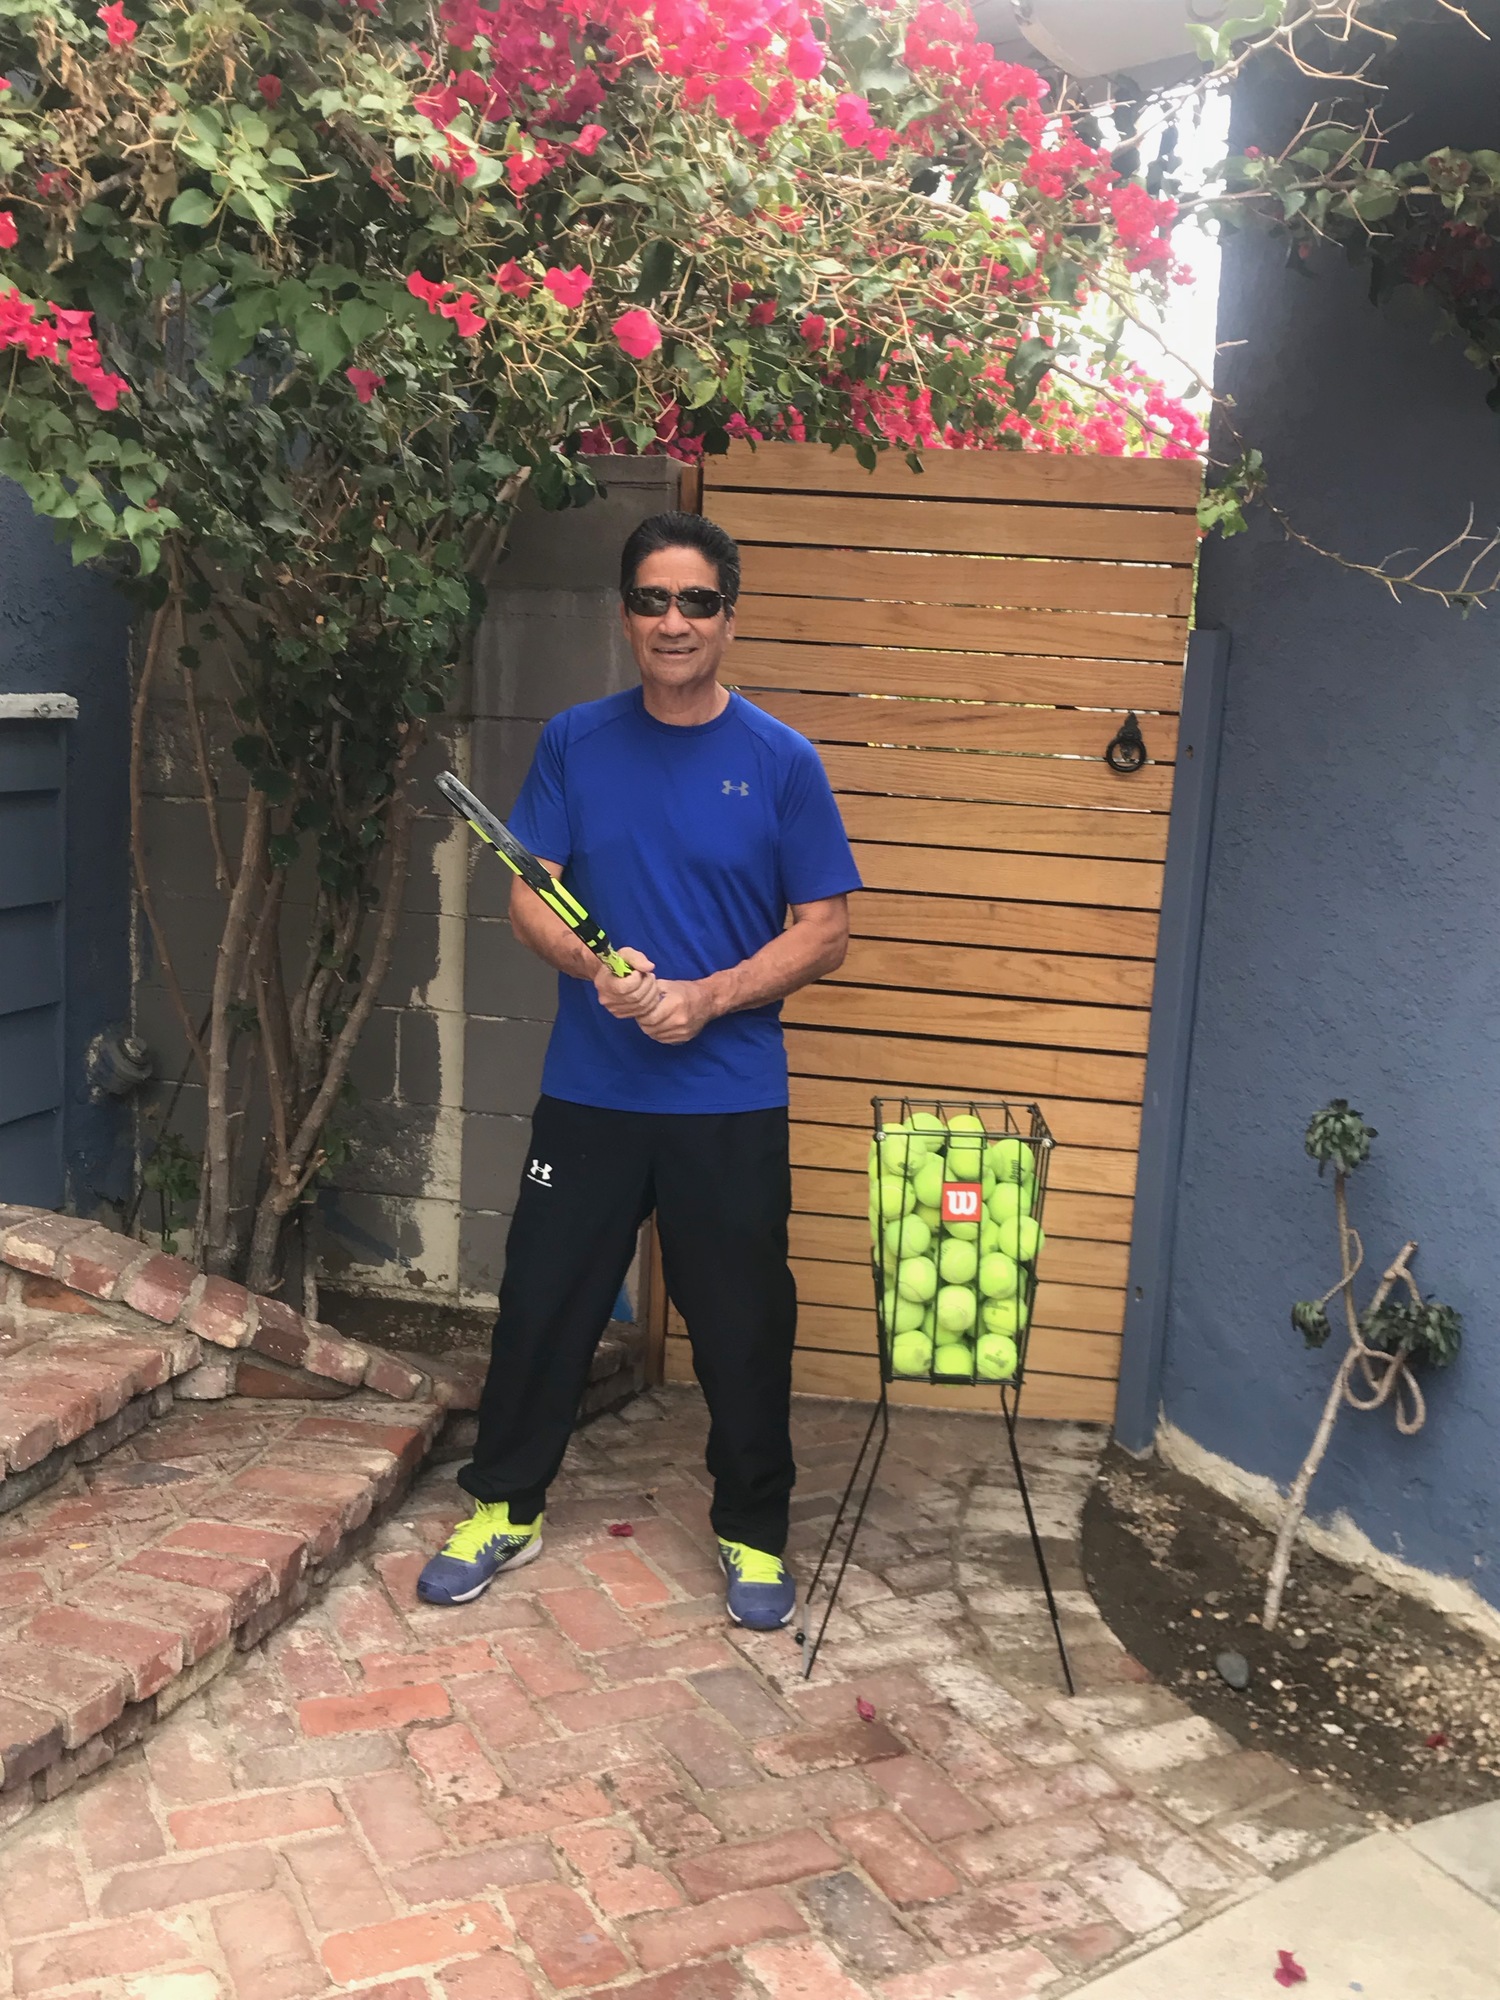 Steve K. teaches tennis lessons in Granada Hills, CA